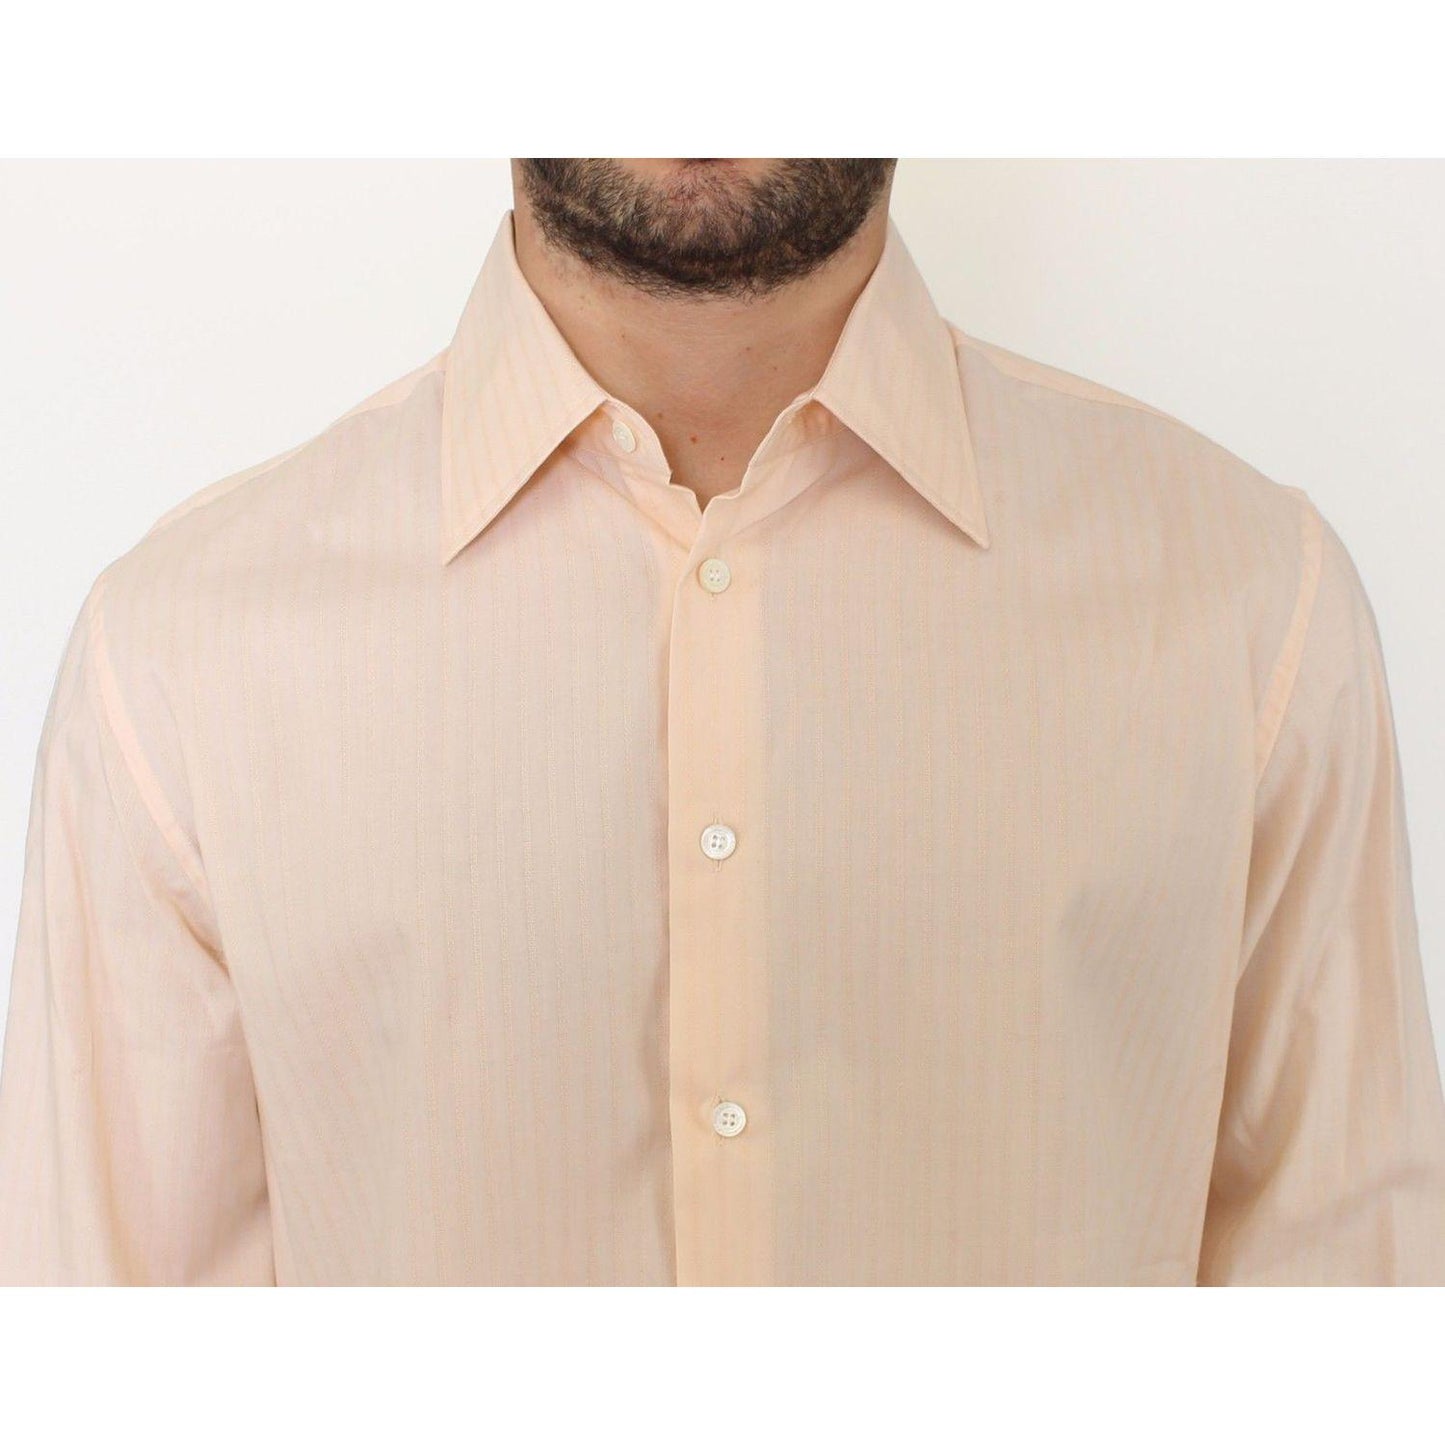 Ermanno Scervino Sunset Hues Striped Cotton Shirt orange-cotton-striped-casual-shirt-top 37697-orange-cotton-striped-casual-shirt-top-4.jpg